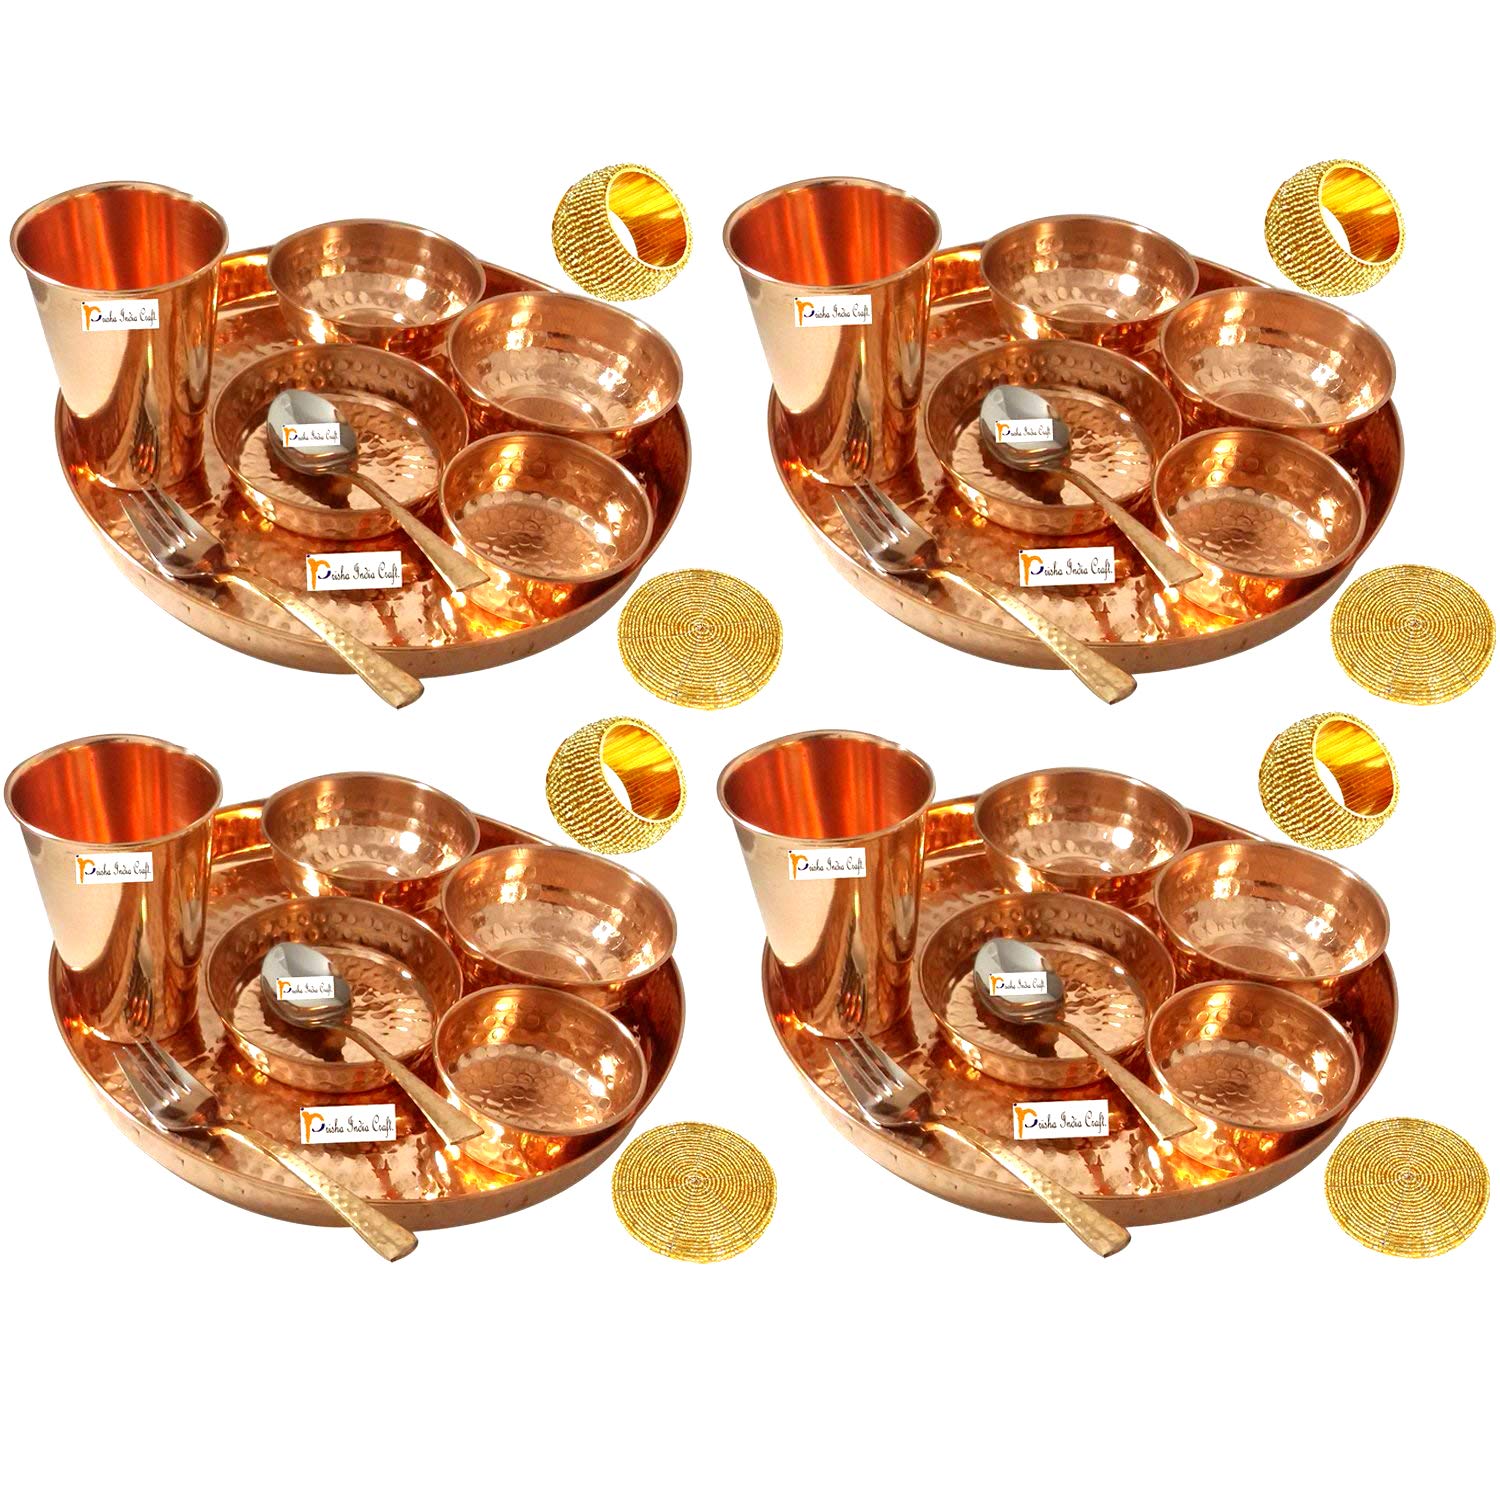 Prisha India Craft Pure Copper Dinner Thali Set, Serveware & Dinnerware, 40 Pieces, Service for 4